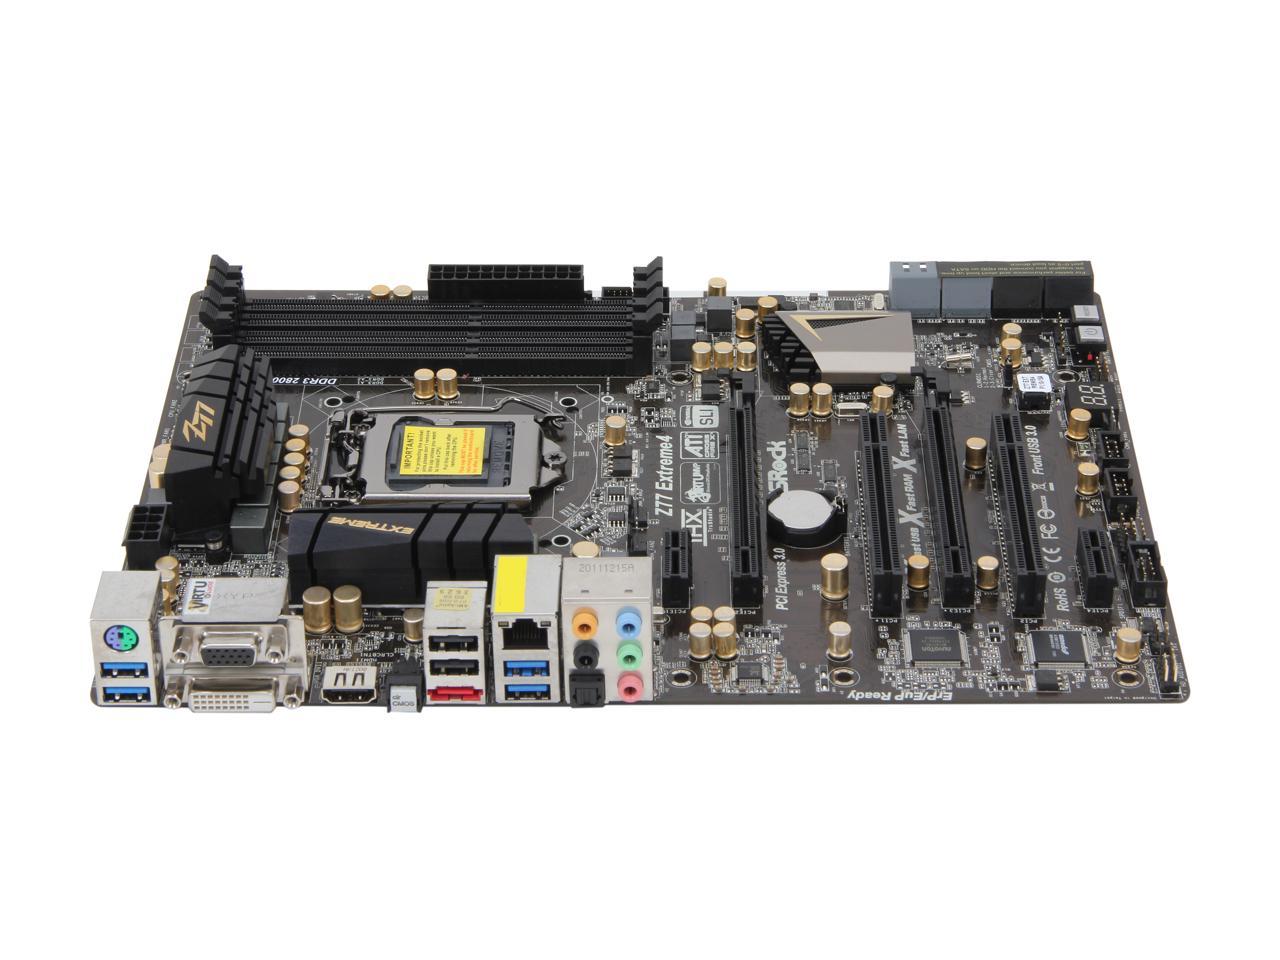 ASRock Z77 Extreme4 LGA 1155 ATX Intel Motherboard - Newegg.com